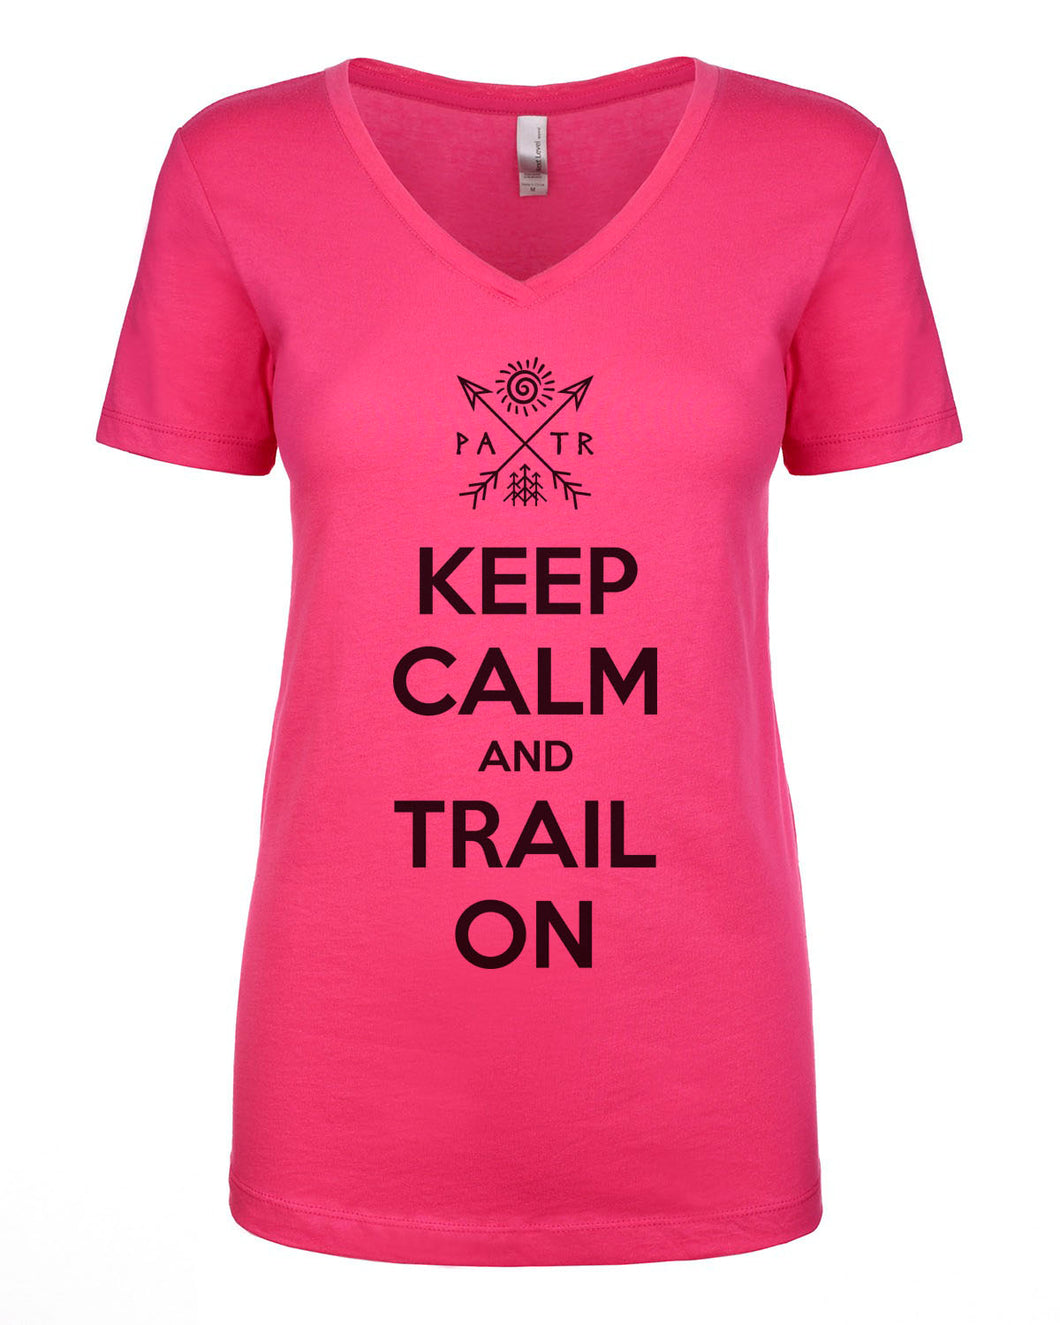 PATR - Keep Calm & Trail On w/ Petroglyph Design - Women's V-Neck T-Shirt